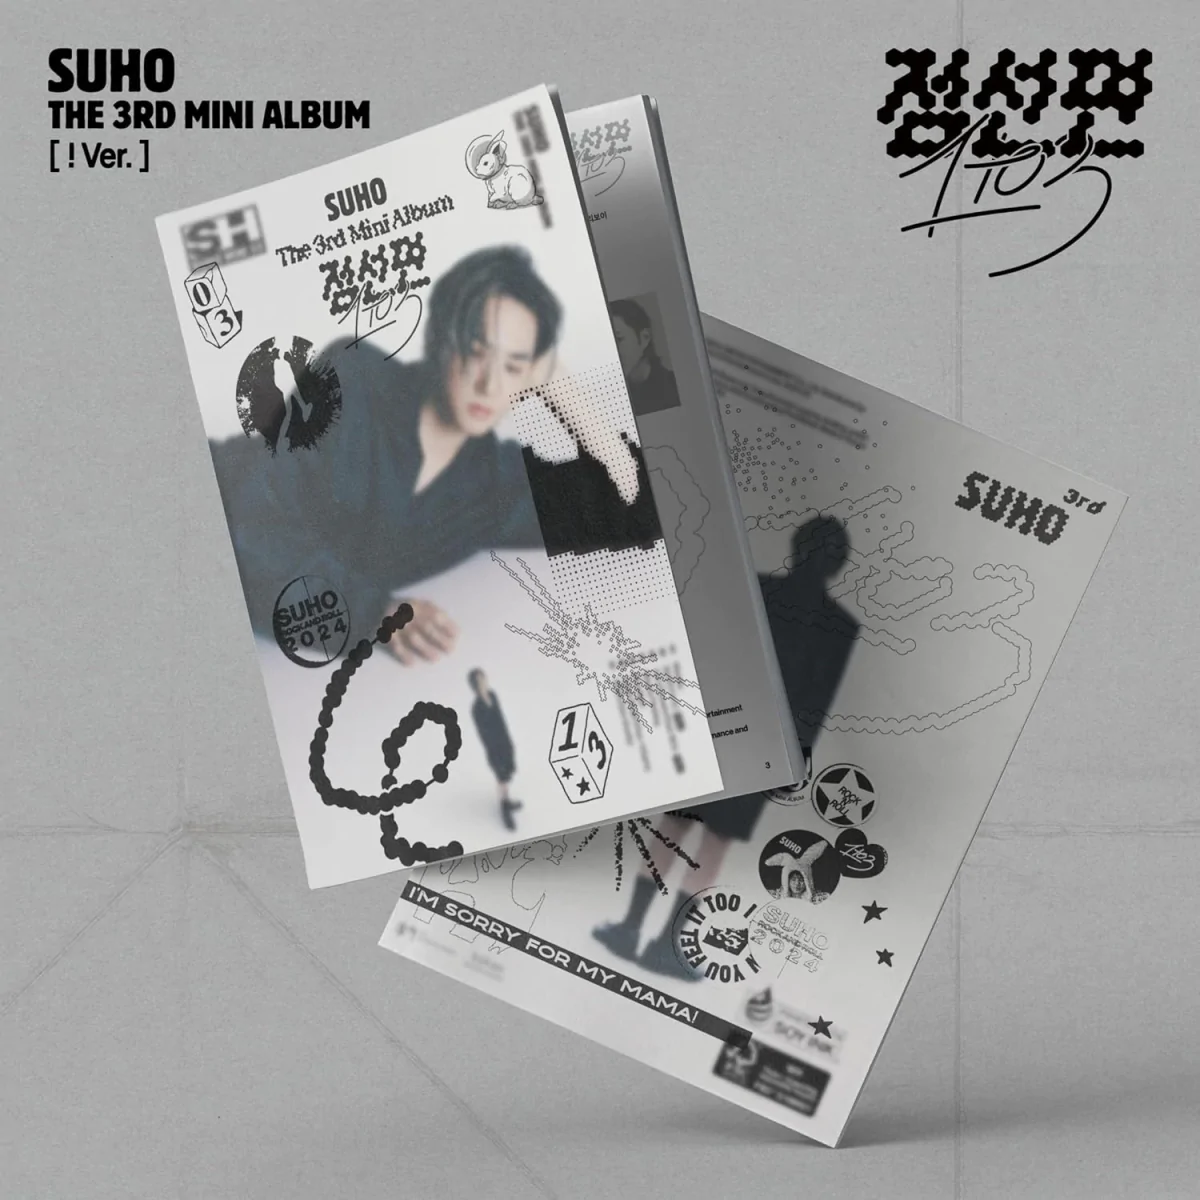 SUHO - 점선면 (1 to 3) (! Version) (3rd Mini Album)